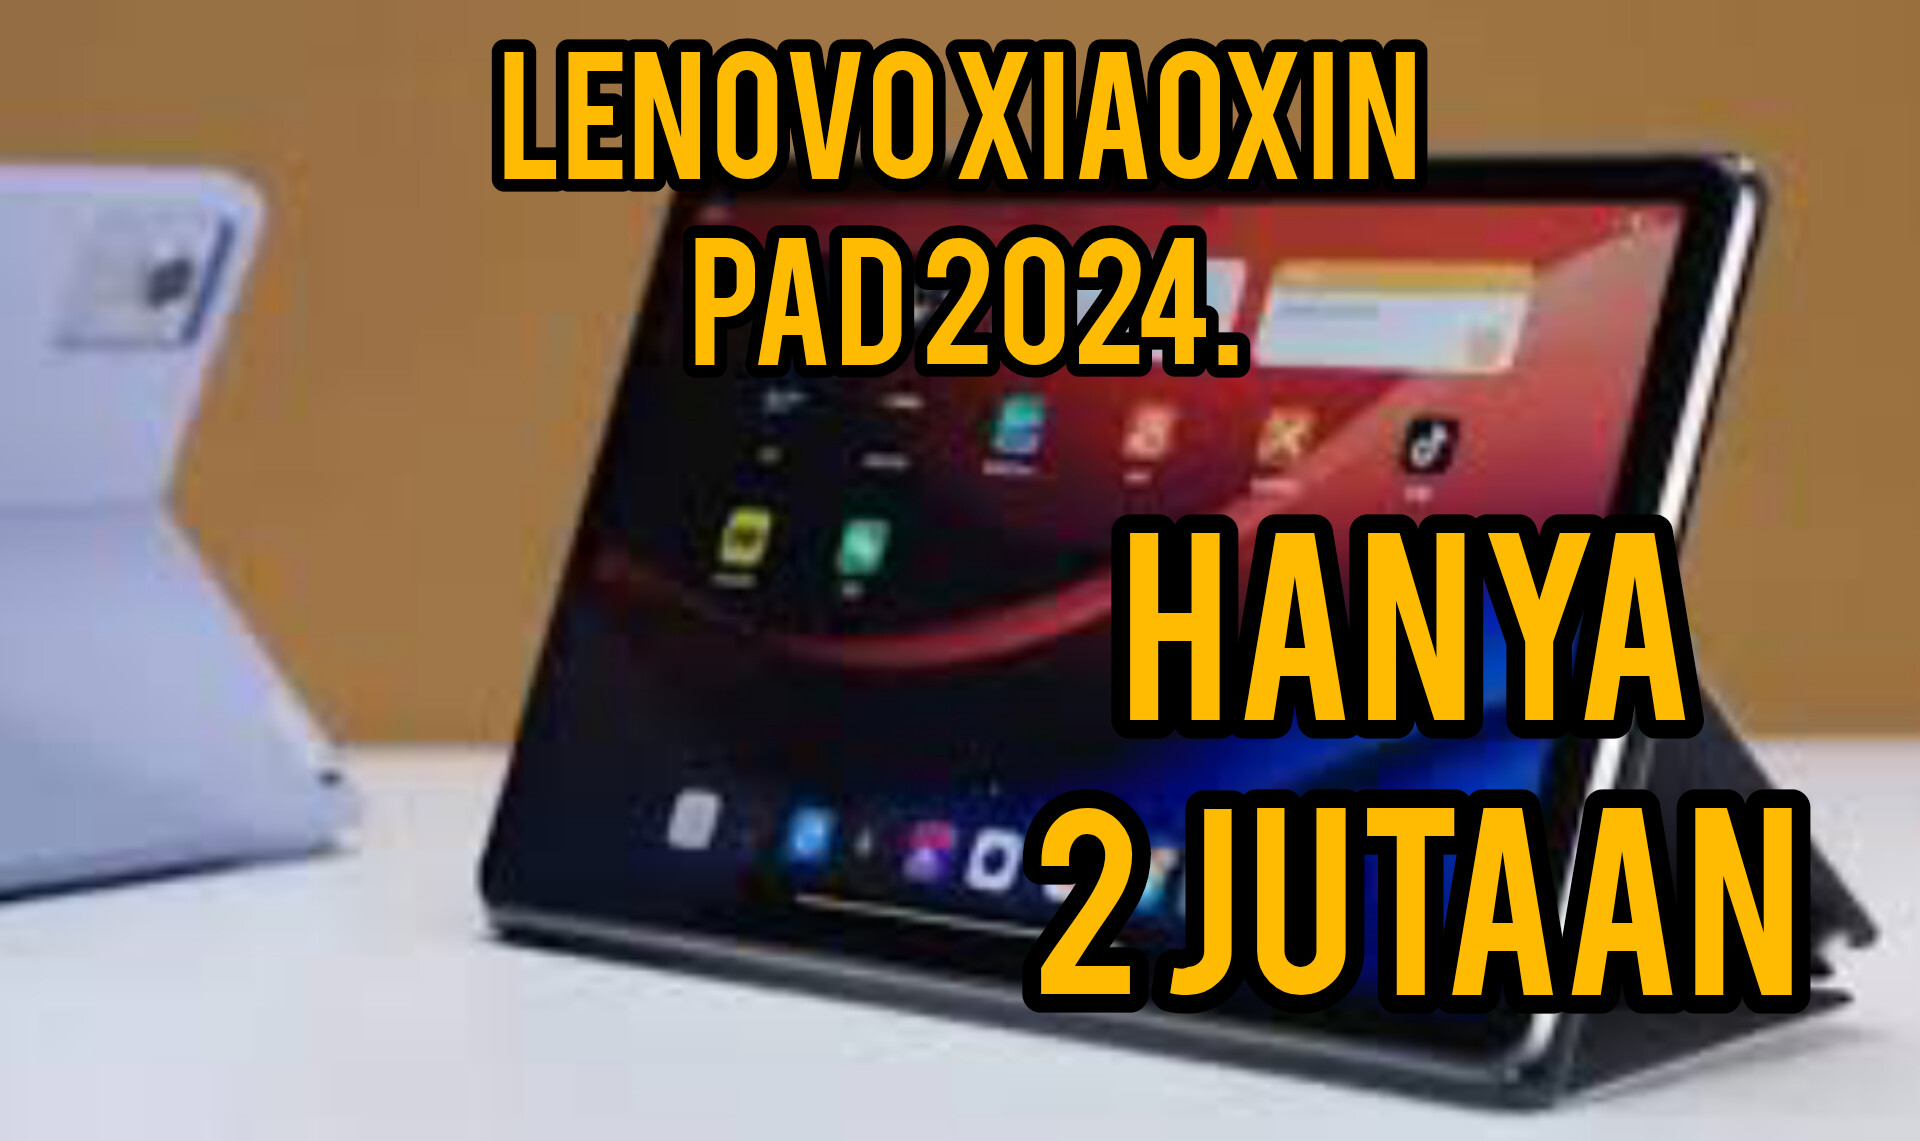 Lenovo Xiaoxin Pad 2024: Tablet Murah, Baterai Jumbo, Spesifikasi Tangguh, Harga Mulai 2 Jutaan